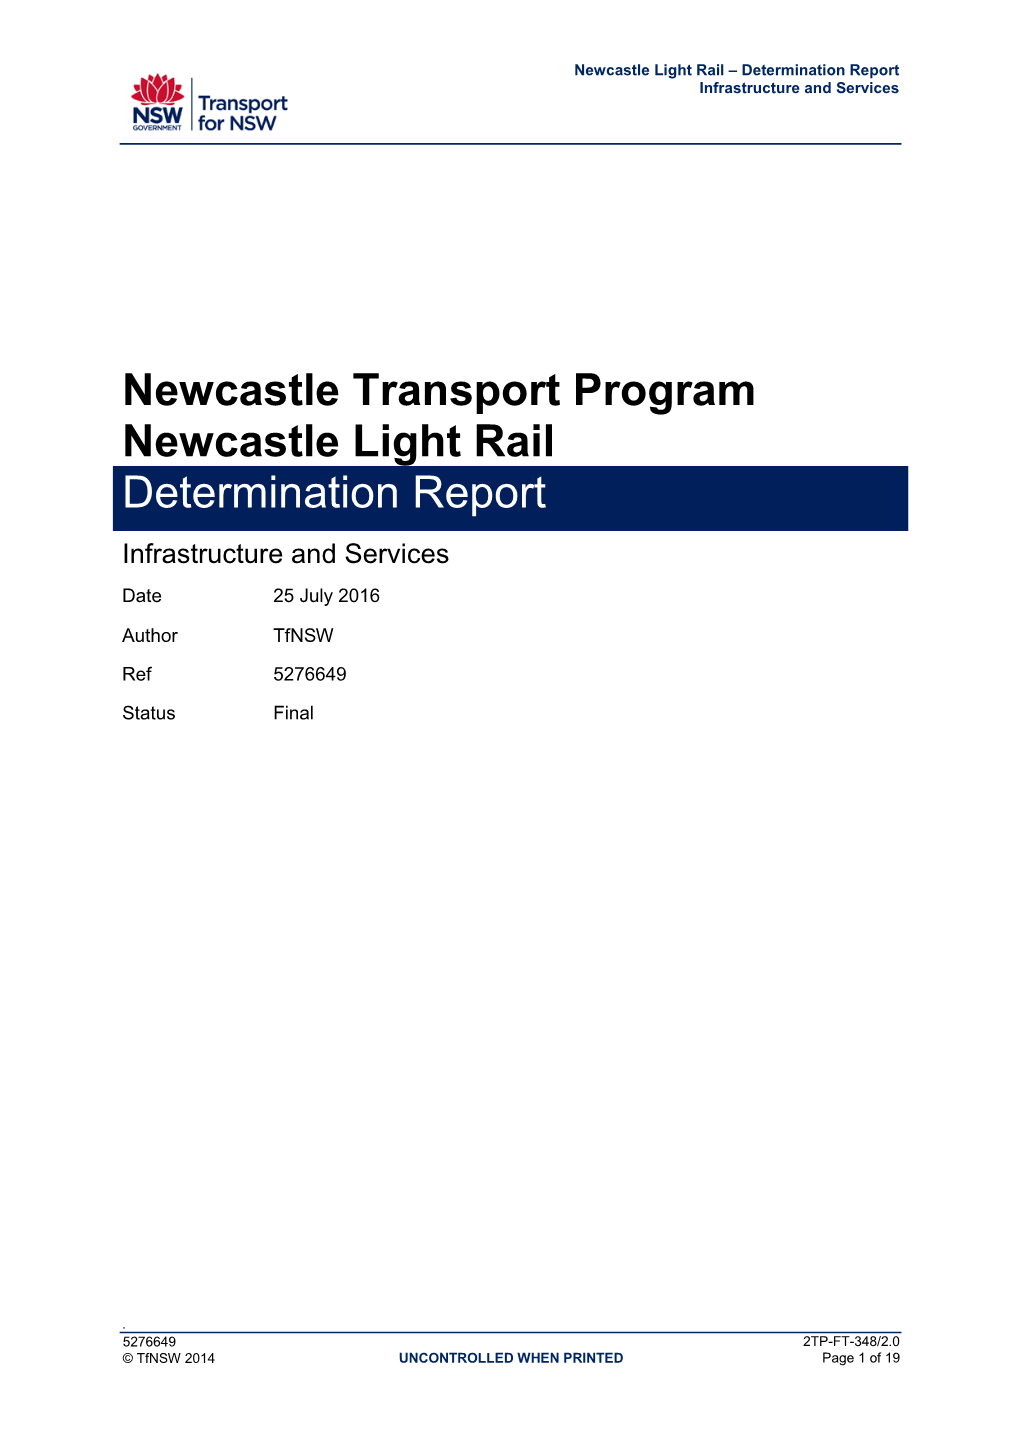 Newcastle Transport Program Newcastle Light Rail Determination Report